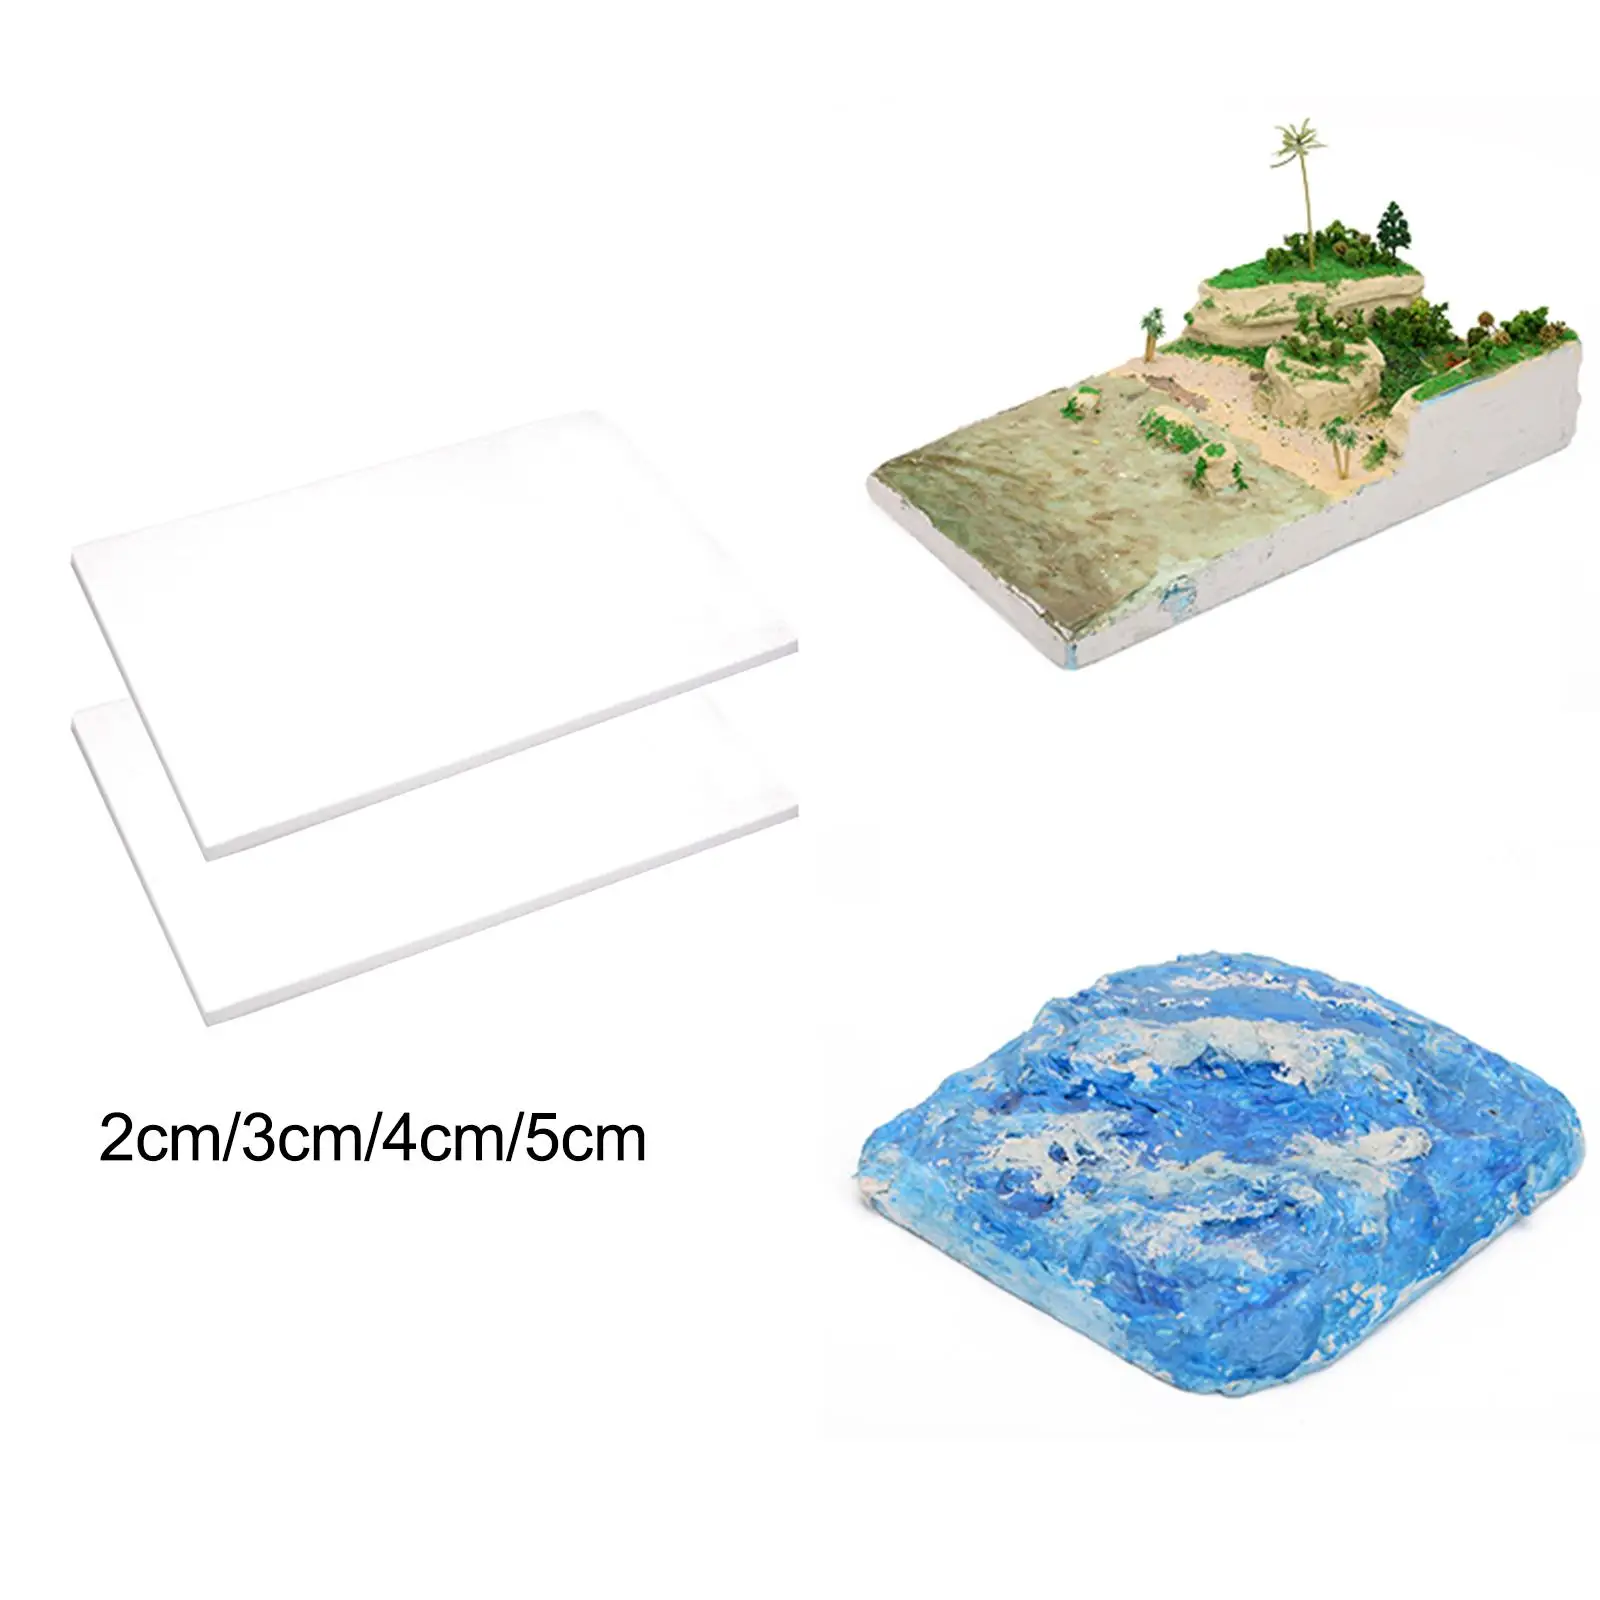 2x Diorama Base Scenery Accessories Micro Landscape Architecture Model Miniature Building Materials Rectangular Blocks